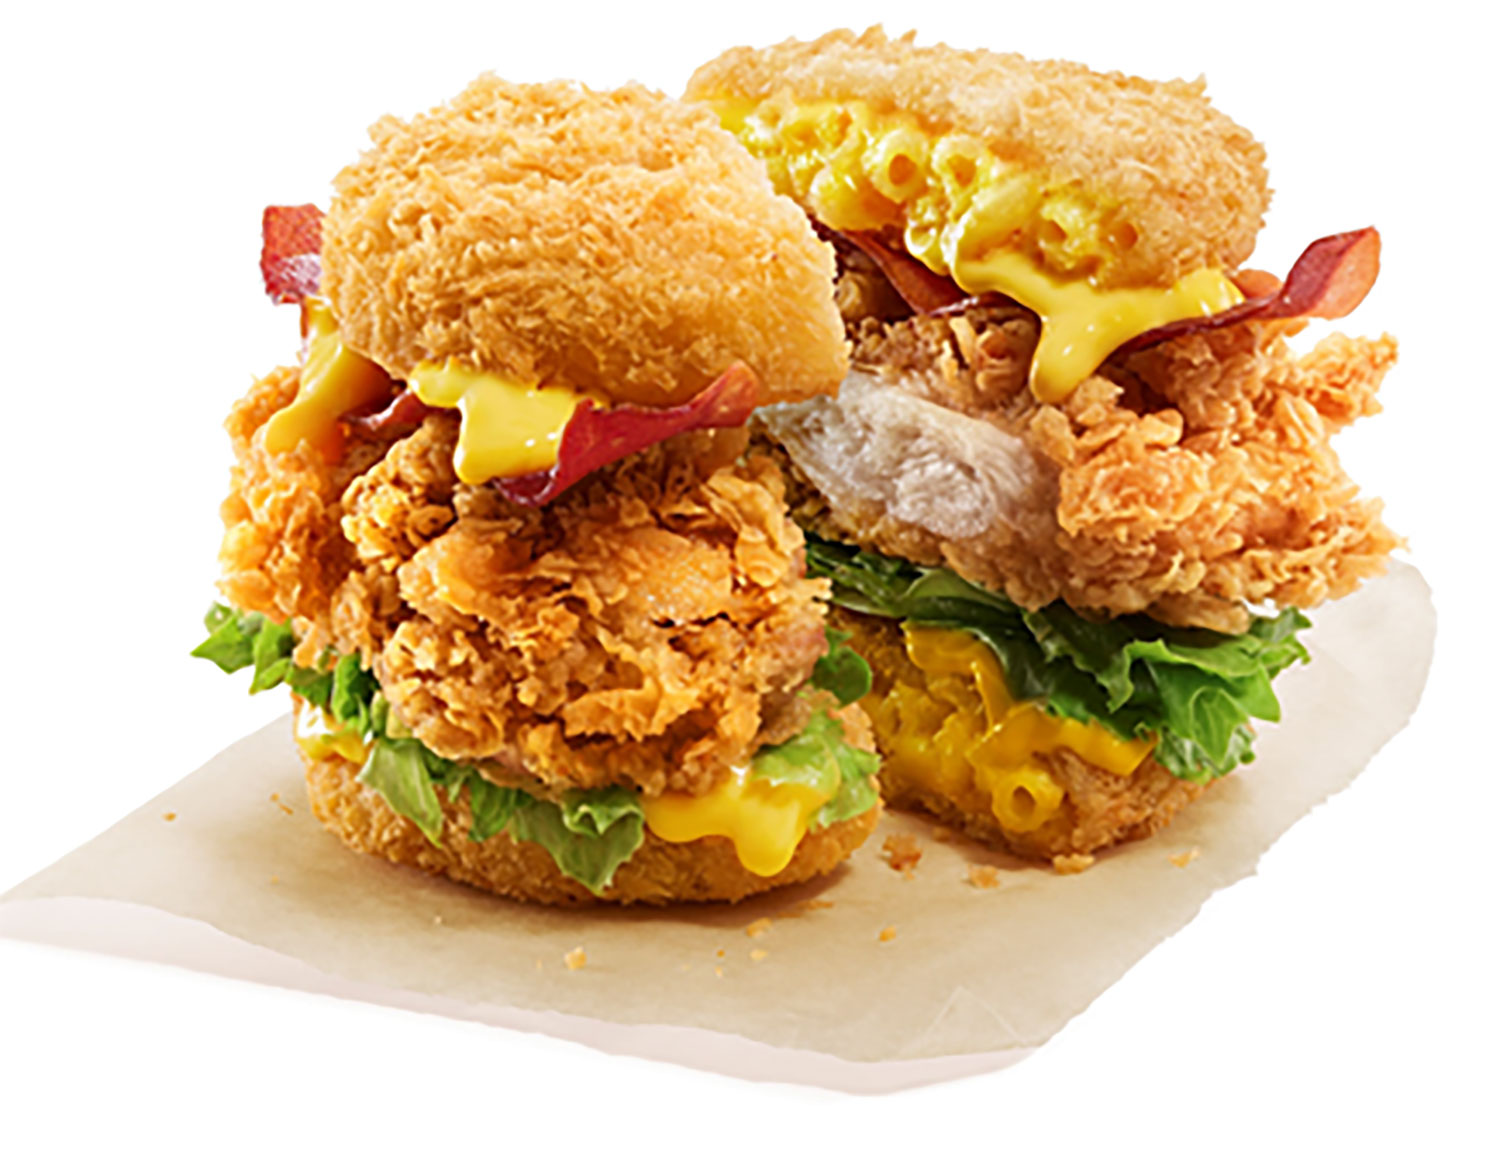  KFC Singapore newest creation – the KFC Mac ‘N Cheese Zinger!